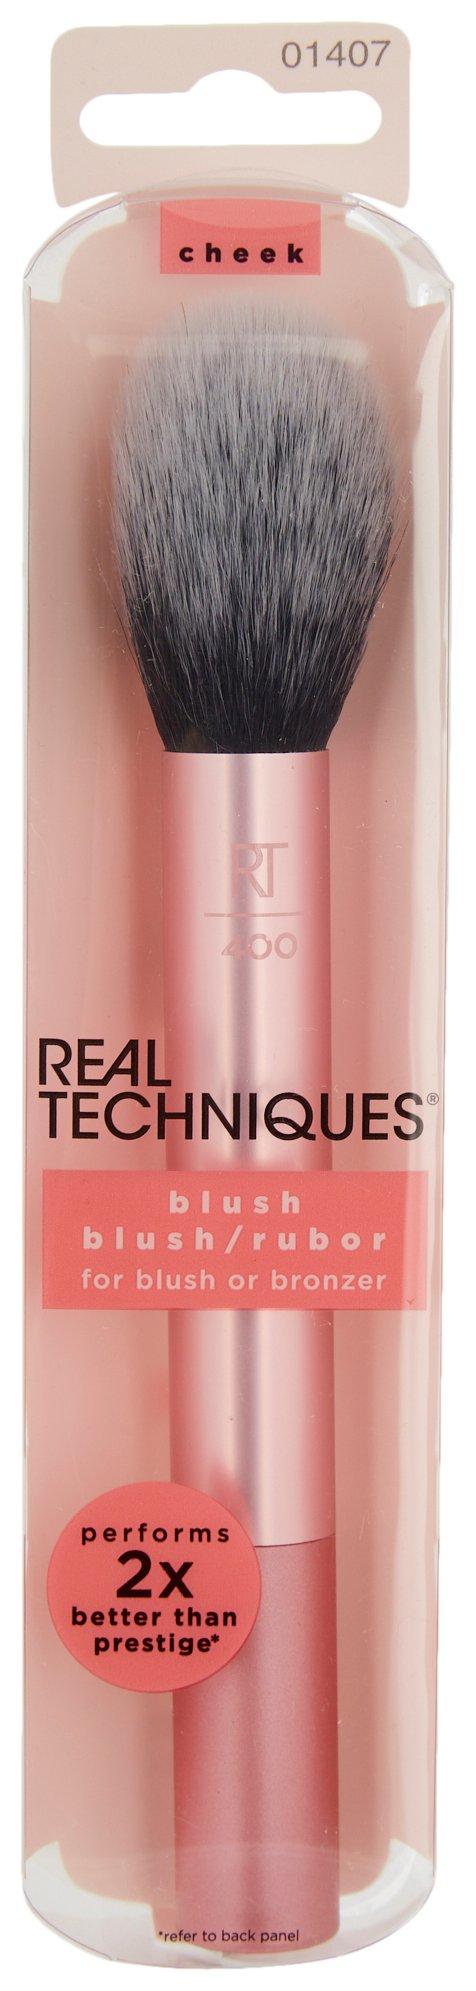 Real Techniques Blush Cheek Makeup Brush